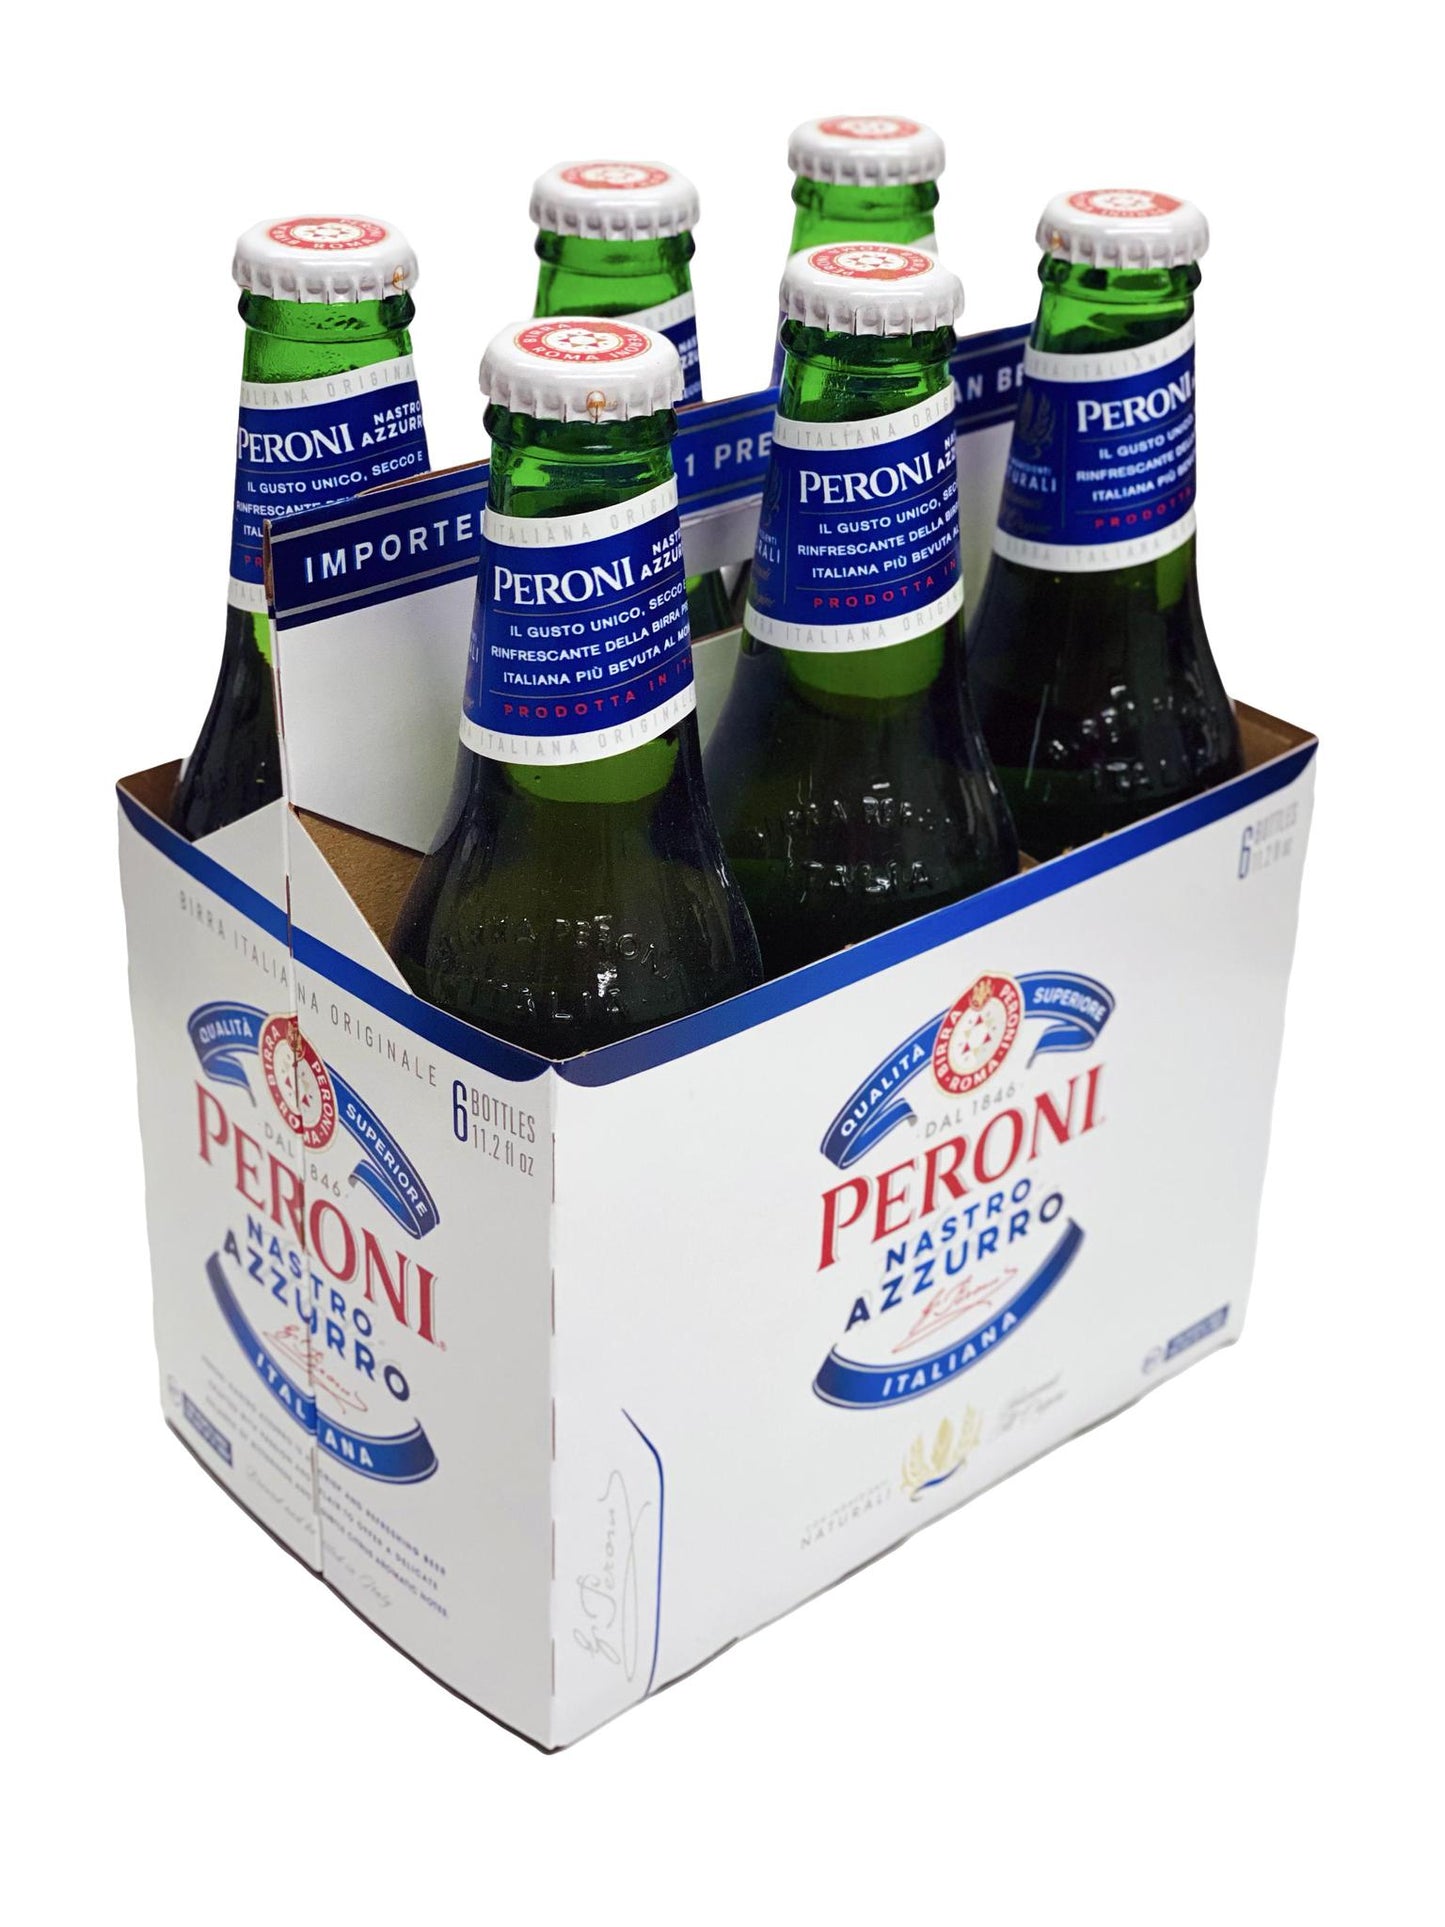 Peroni Nastro Azzurro Lager, 6-pack